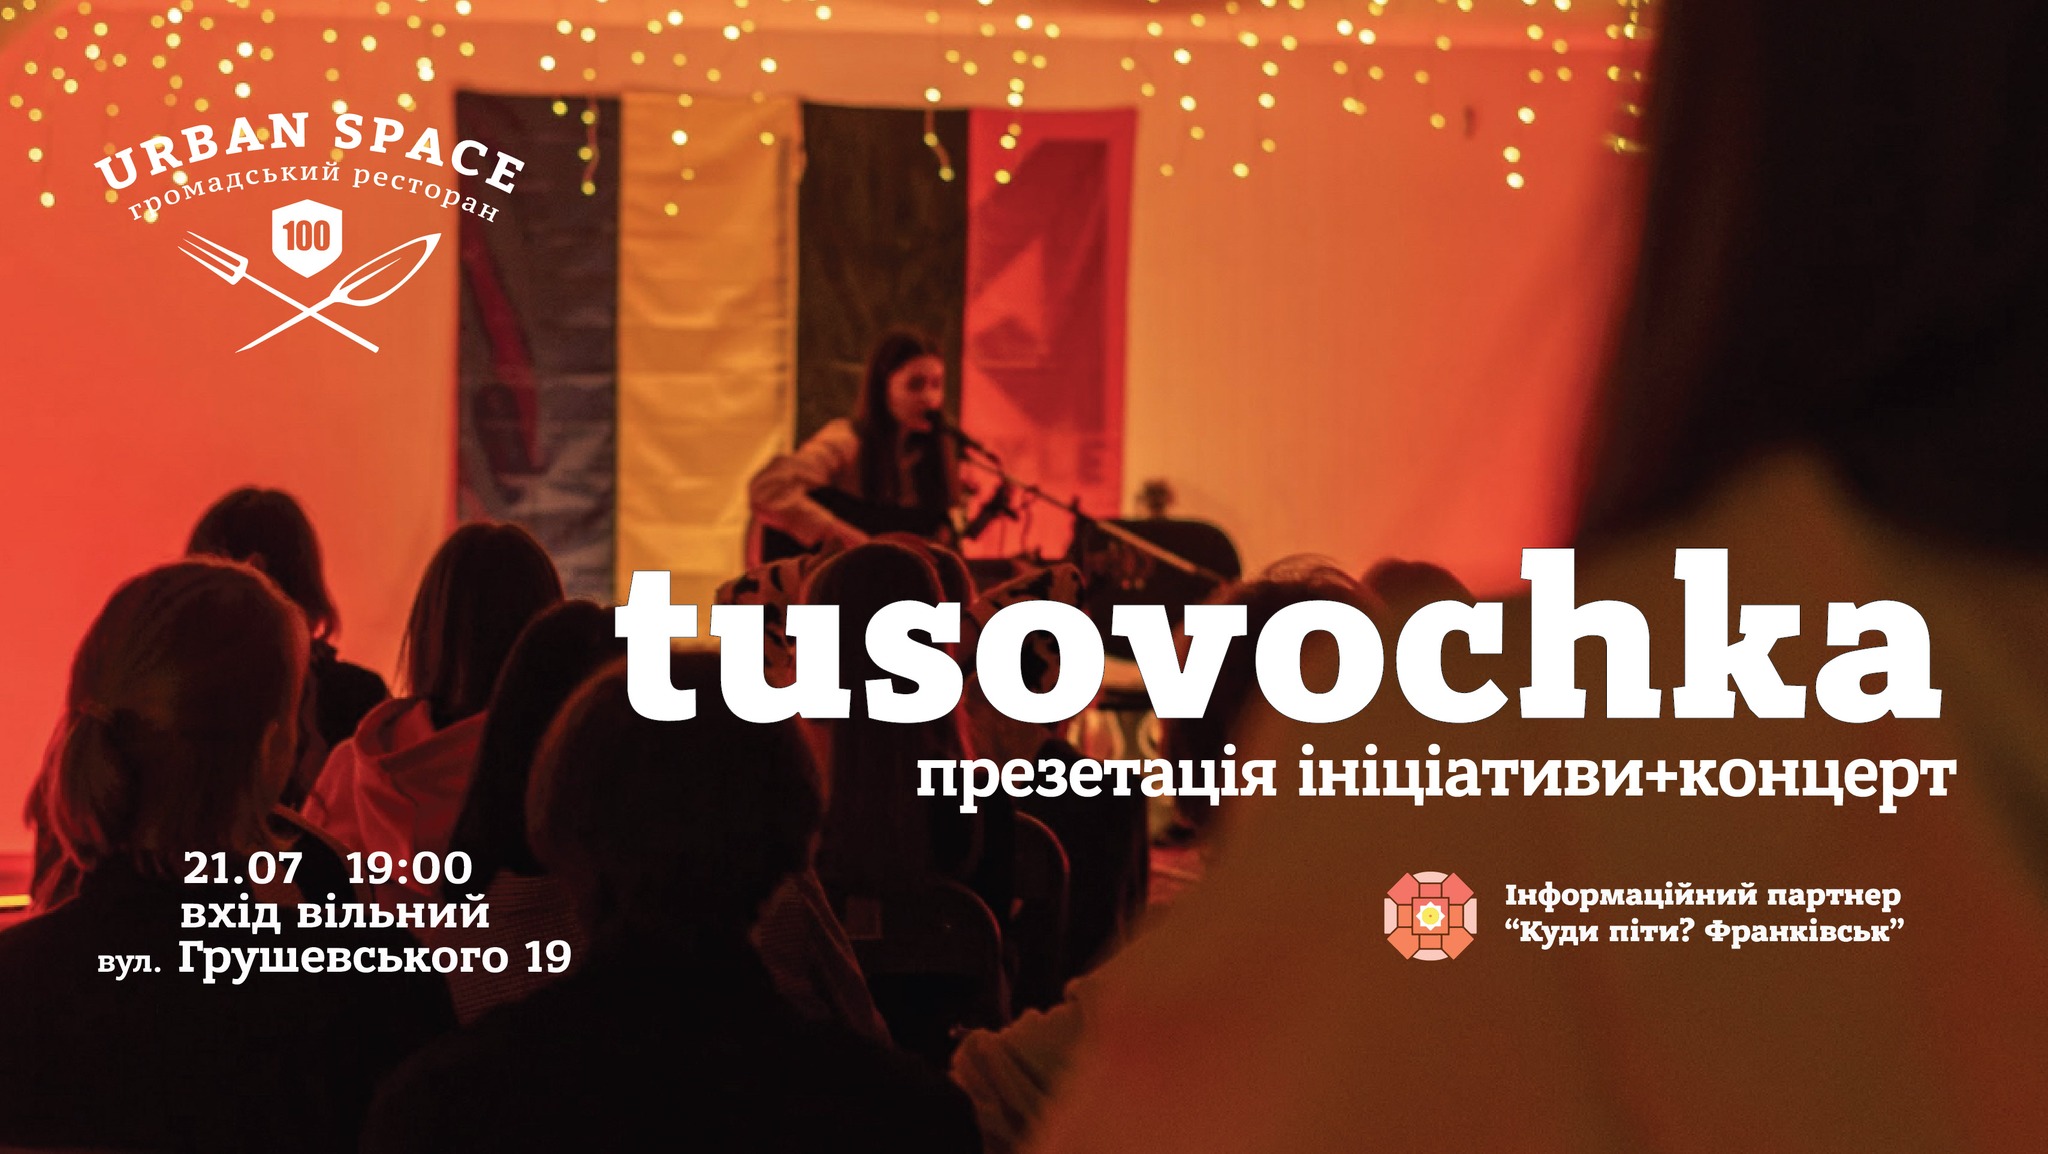 Tusovochka – презетацiя iнiцiативи+концерт